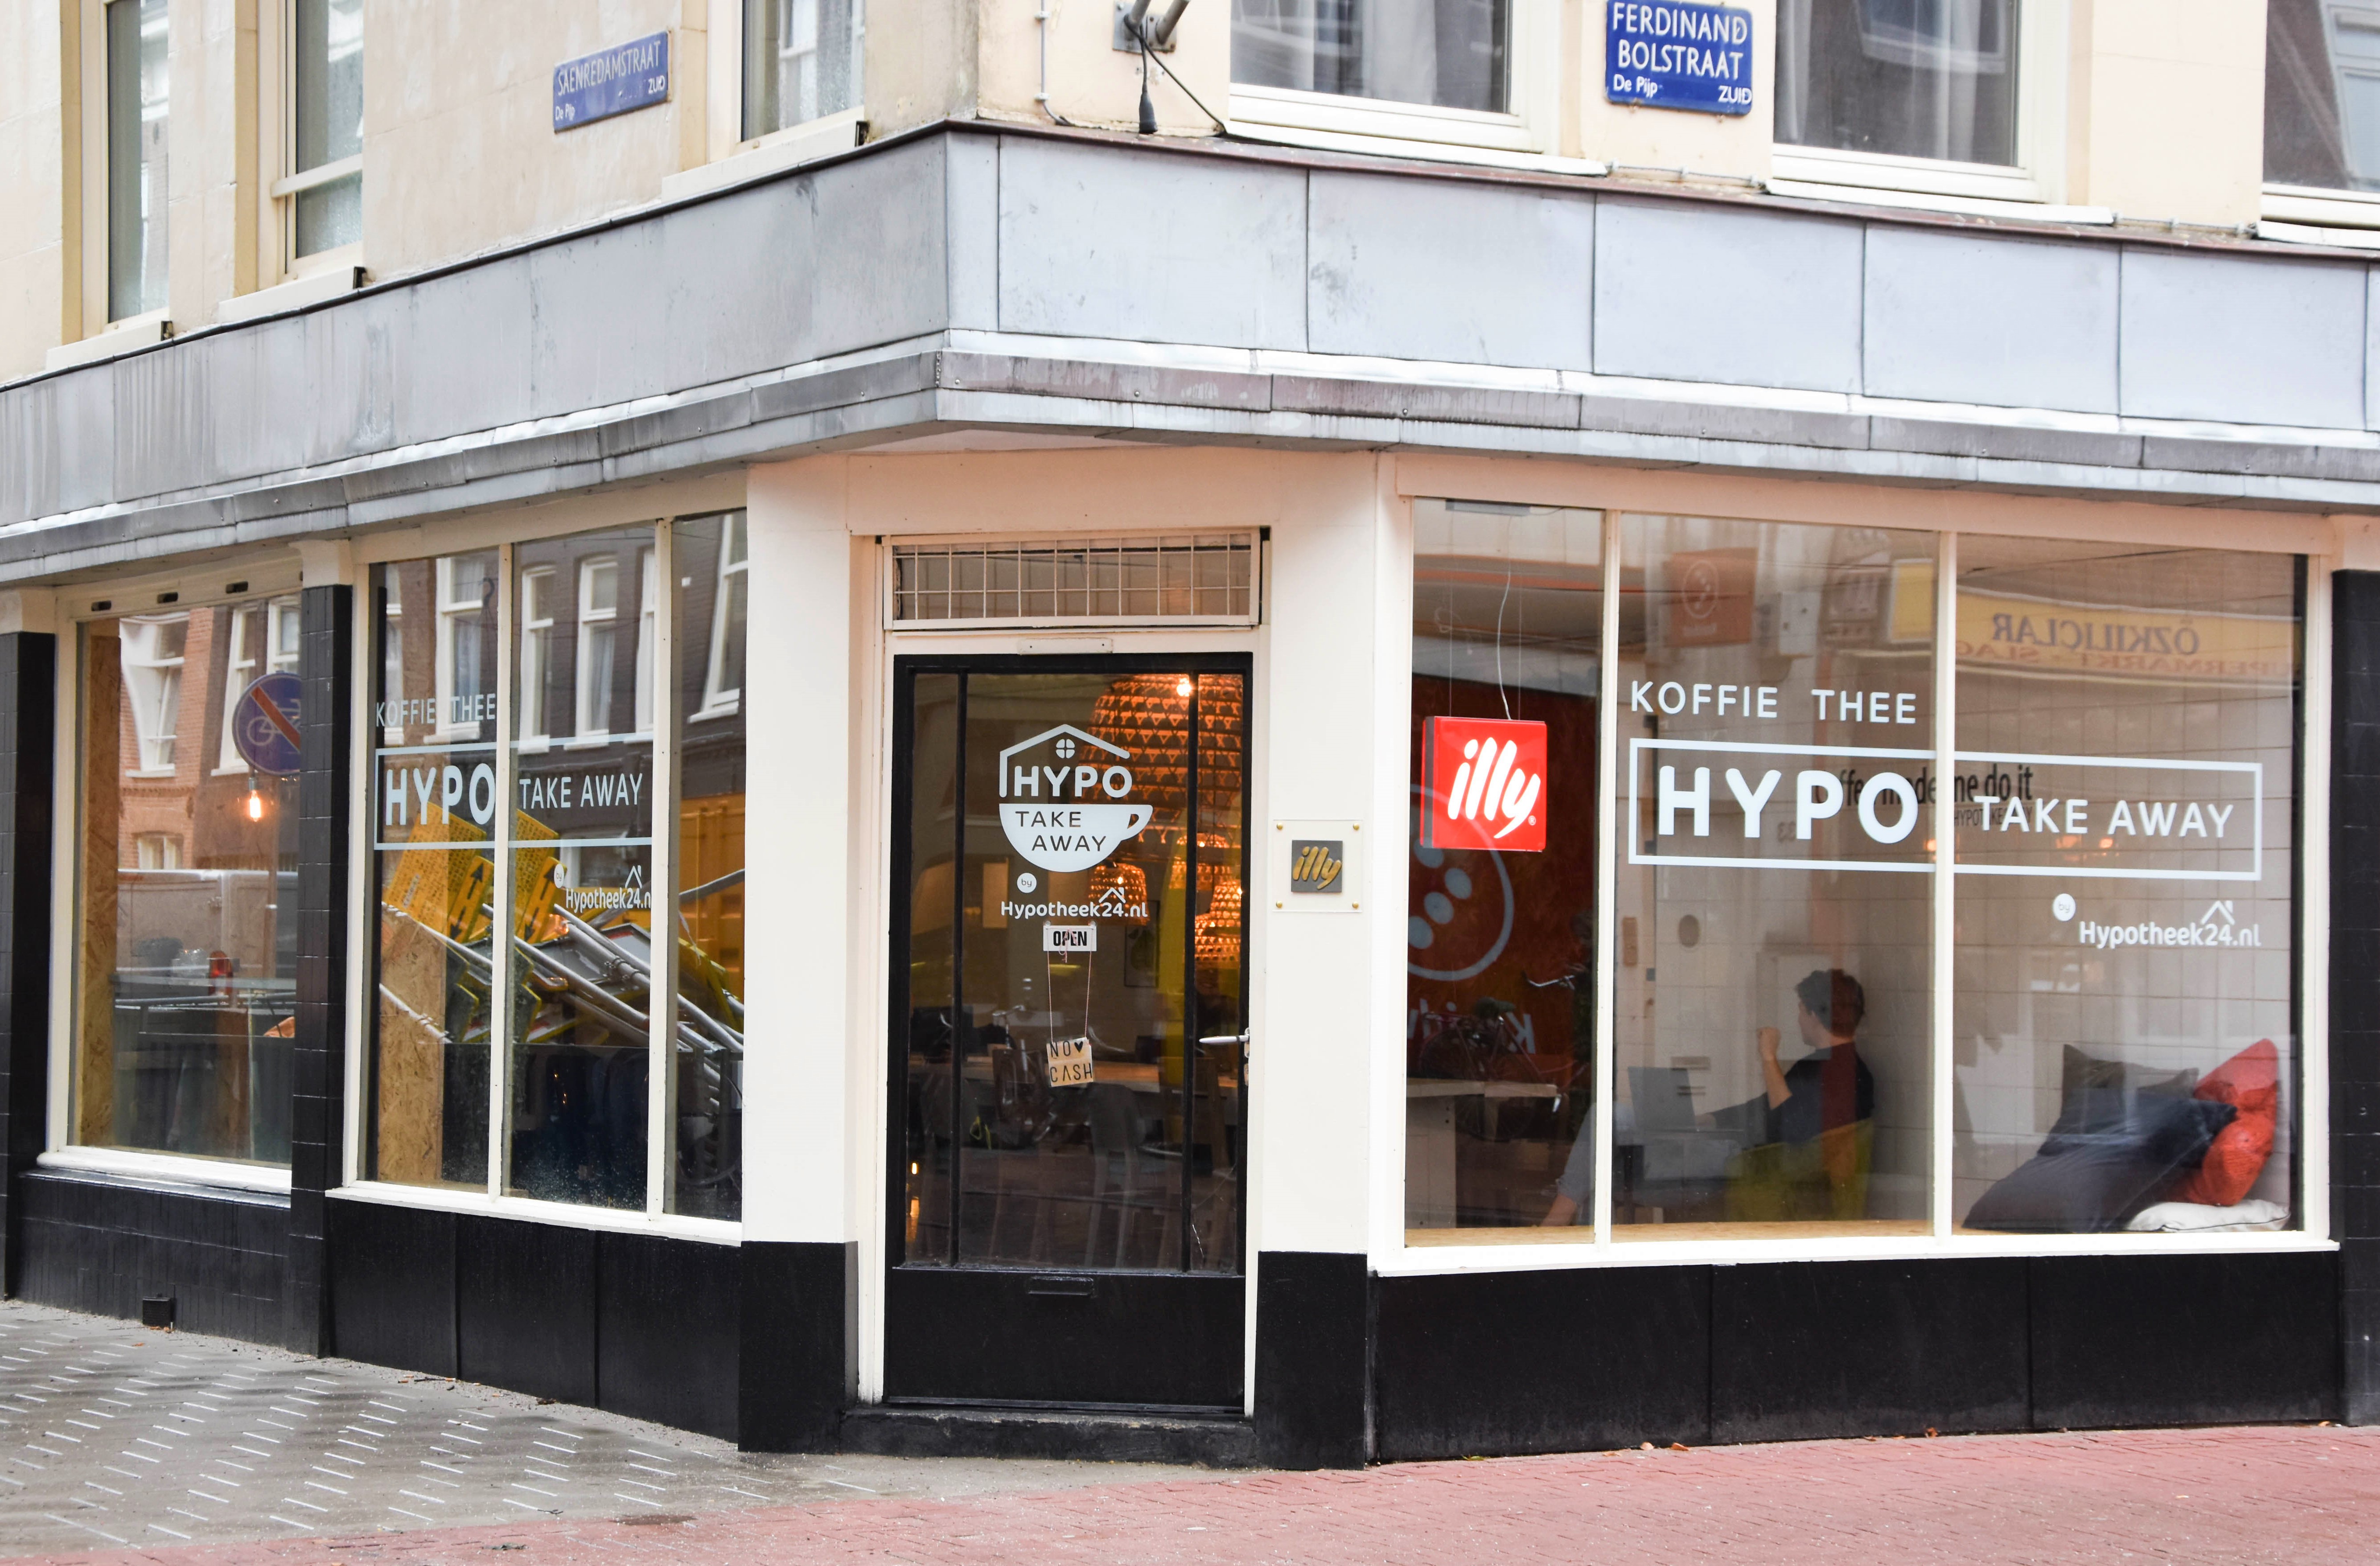 Hypotheek24.nl start pop-up Hypo Take Away